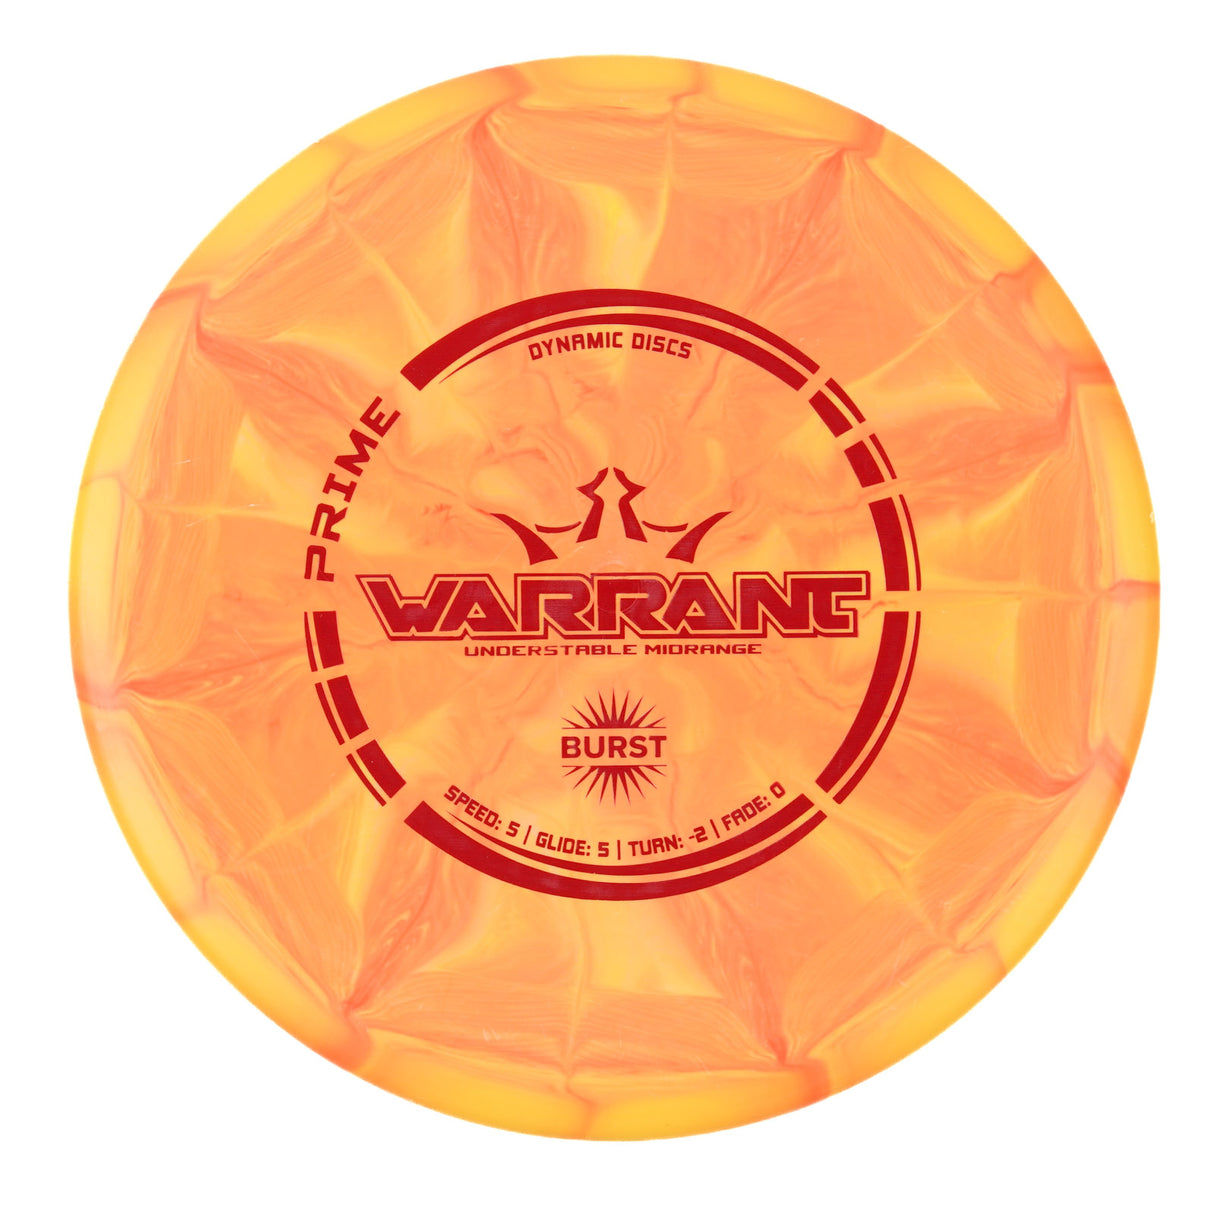 Dynamic Discs Warrant - Prime Burst 178g | Style 0001